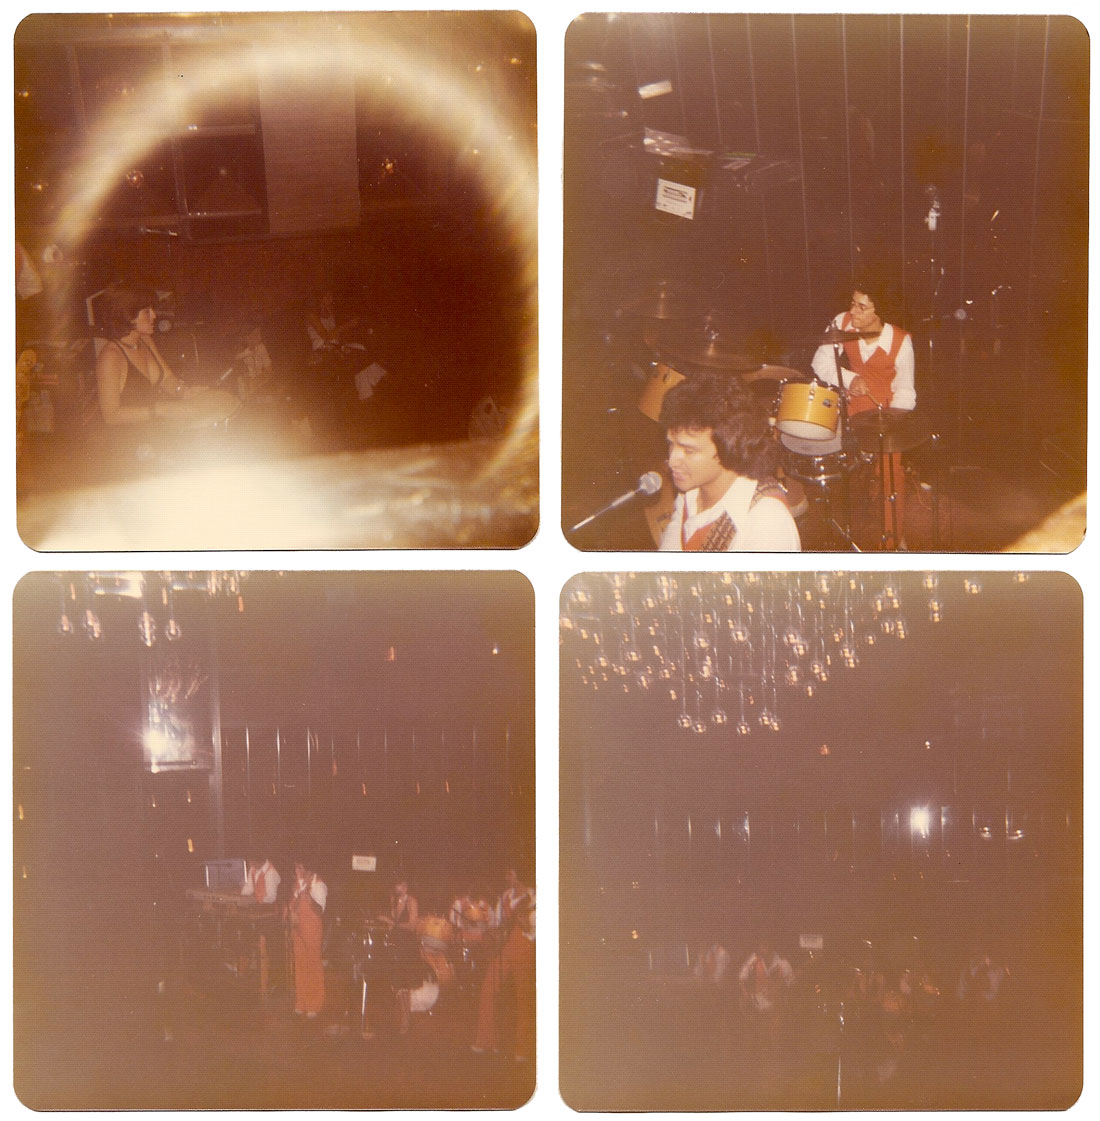 Clockwork performance at Pete & Lenny’s on June 28, 1976